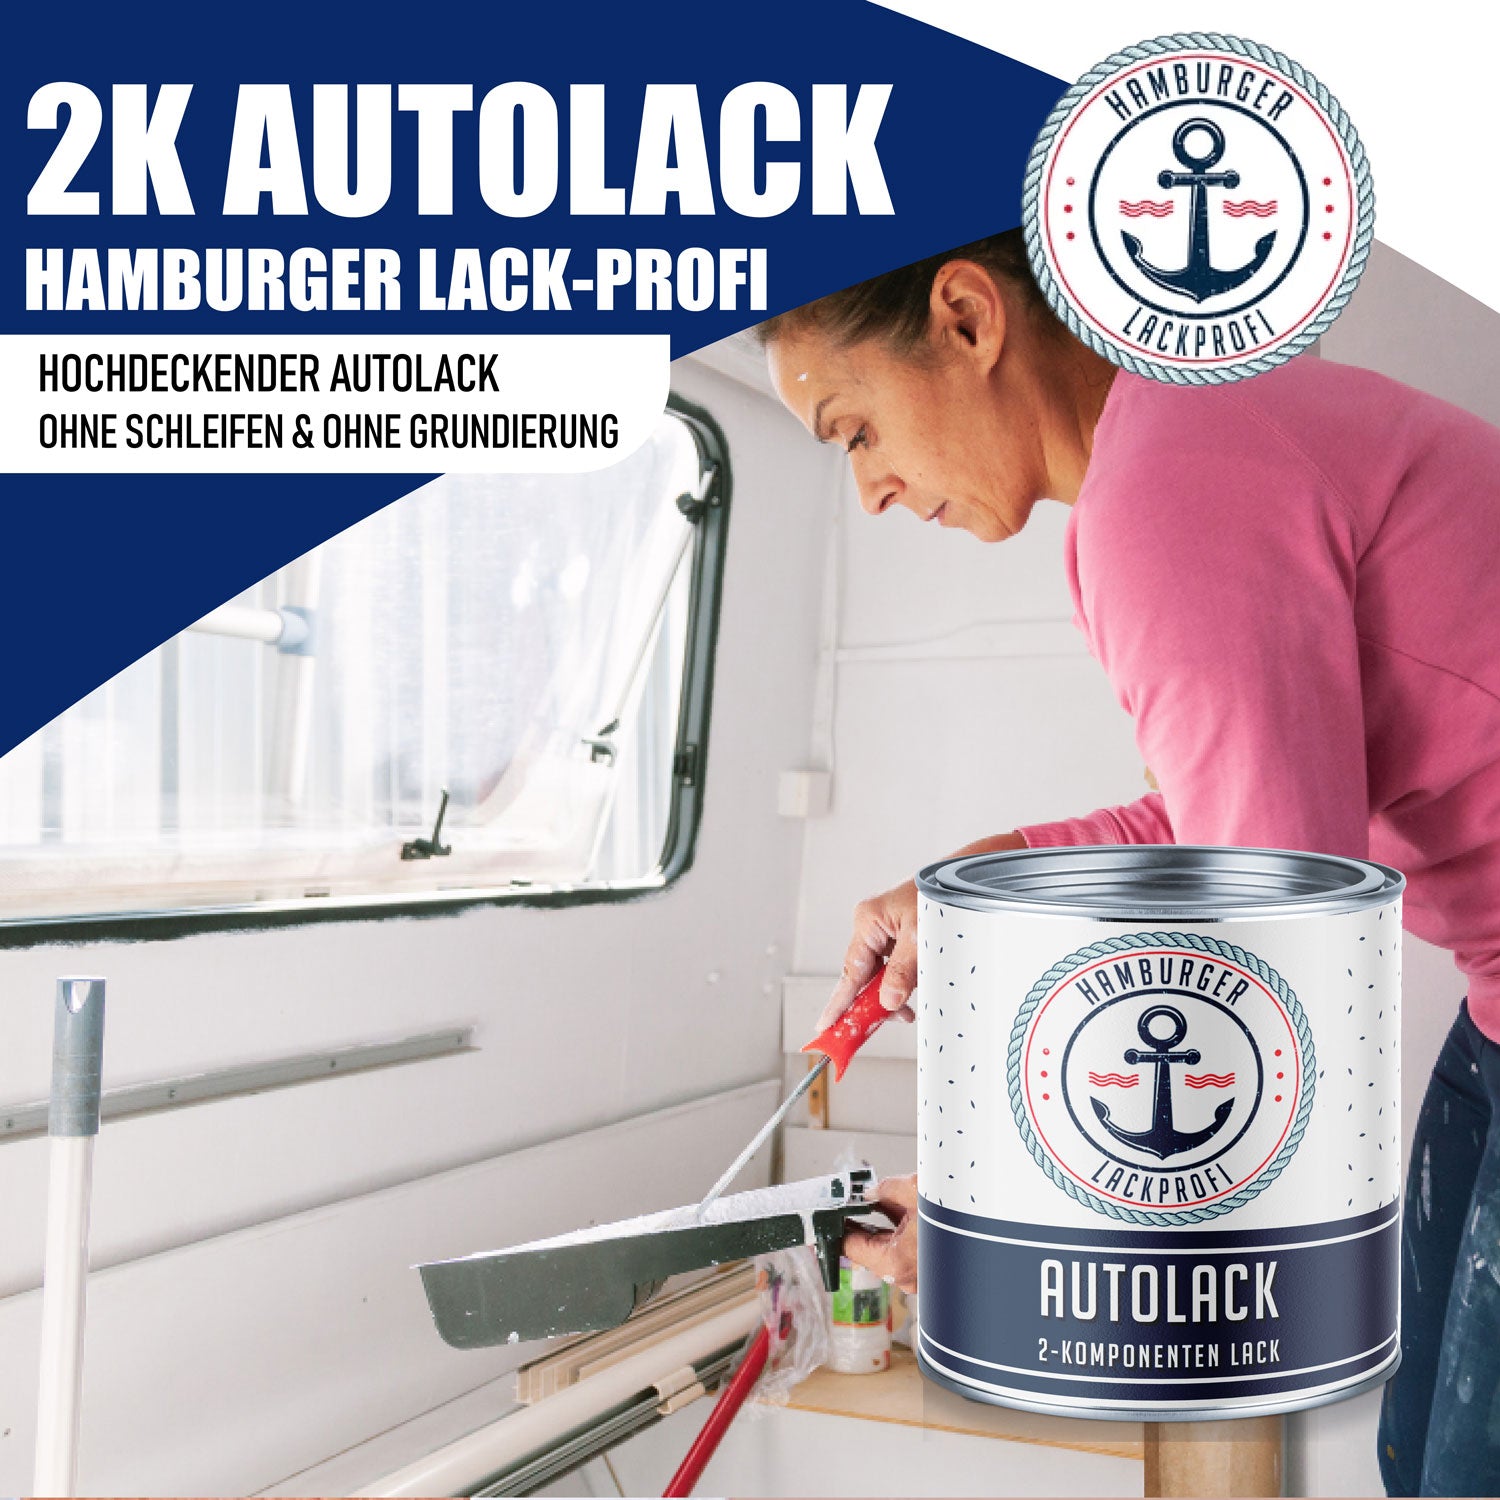 Hamburger Lack-Profi 2K Autolack in Opalgrün RAL 6026 mit Lackierset (X300) & Verdünnung (1 L) - 30% Sparangebot